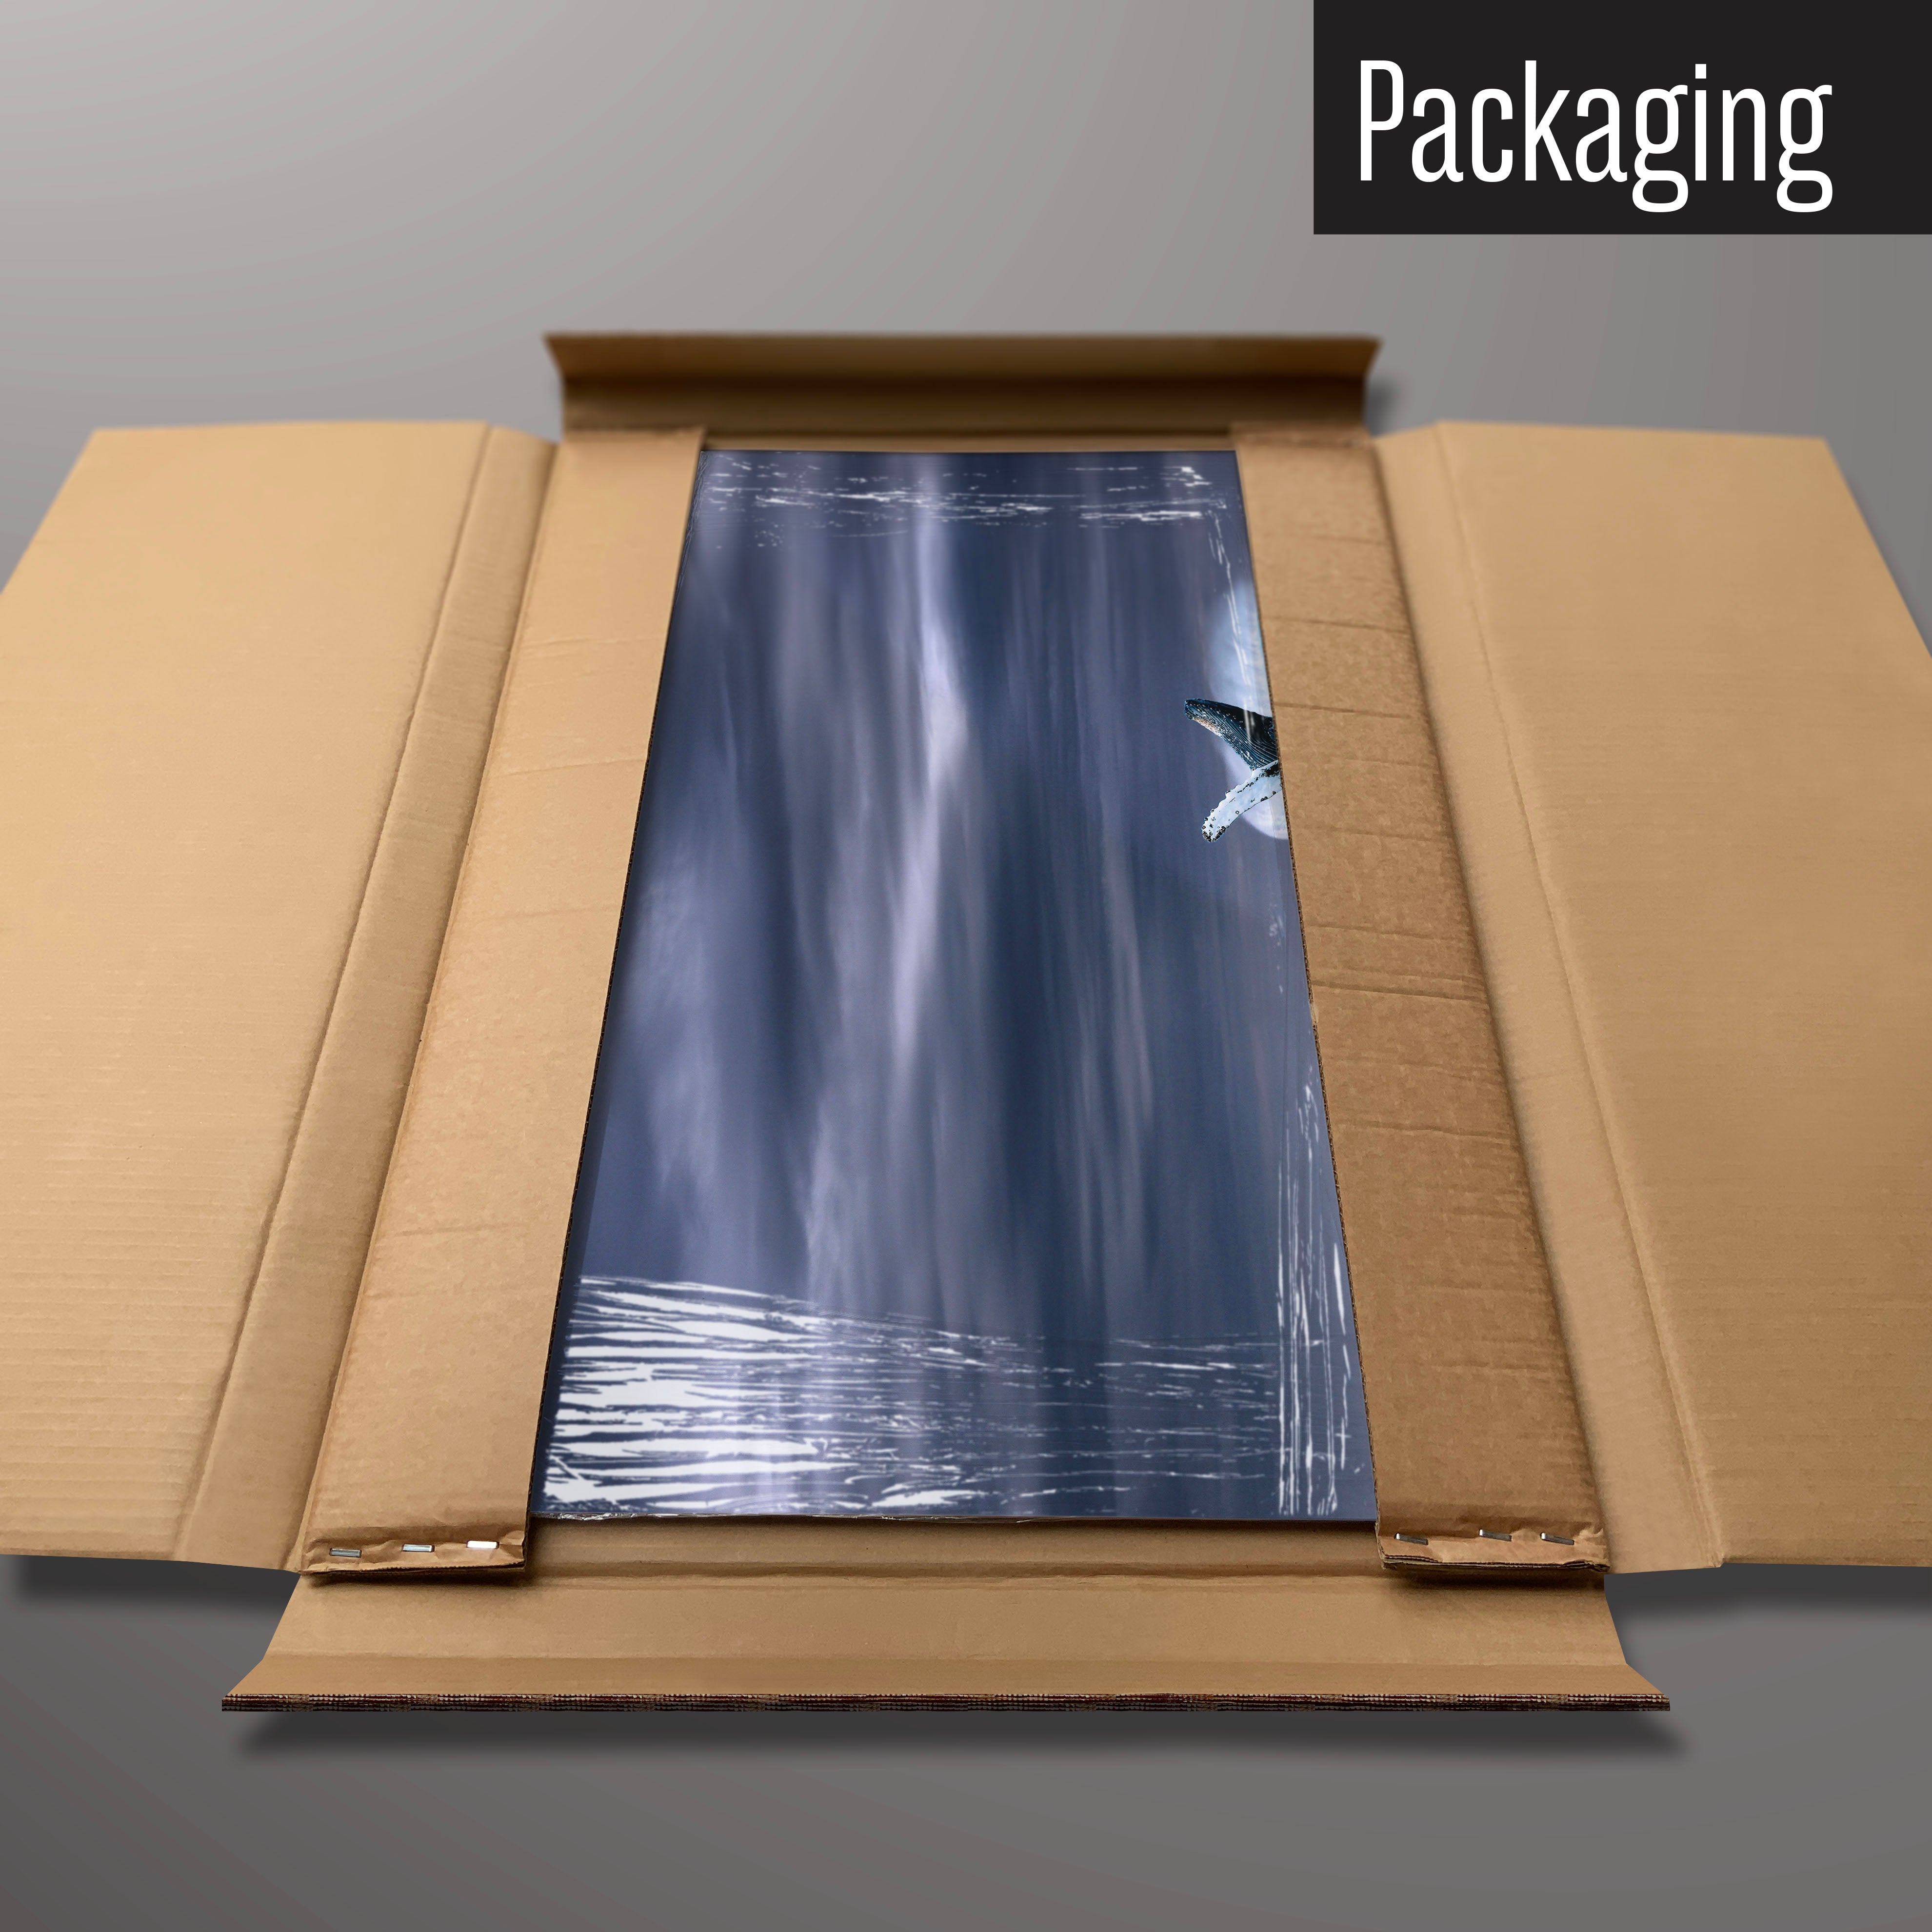 A whale magnetic board in it’s cardboard packaging